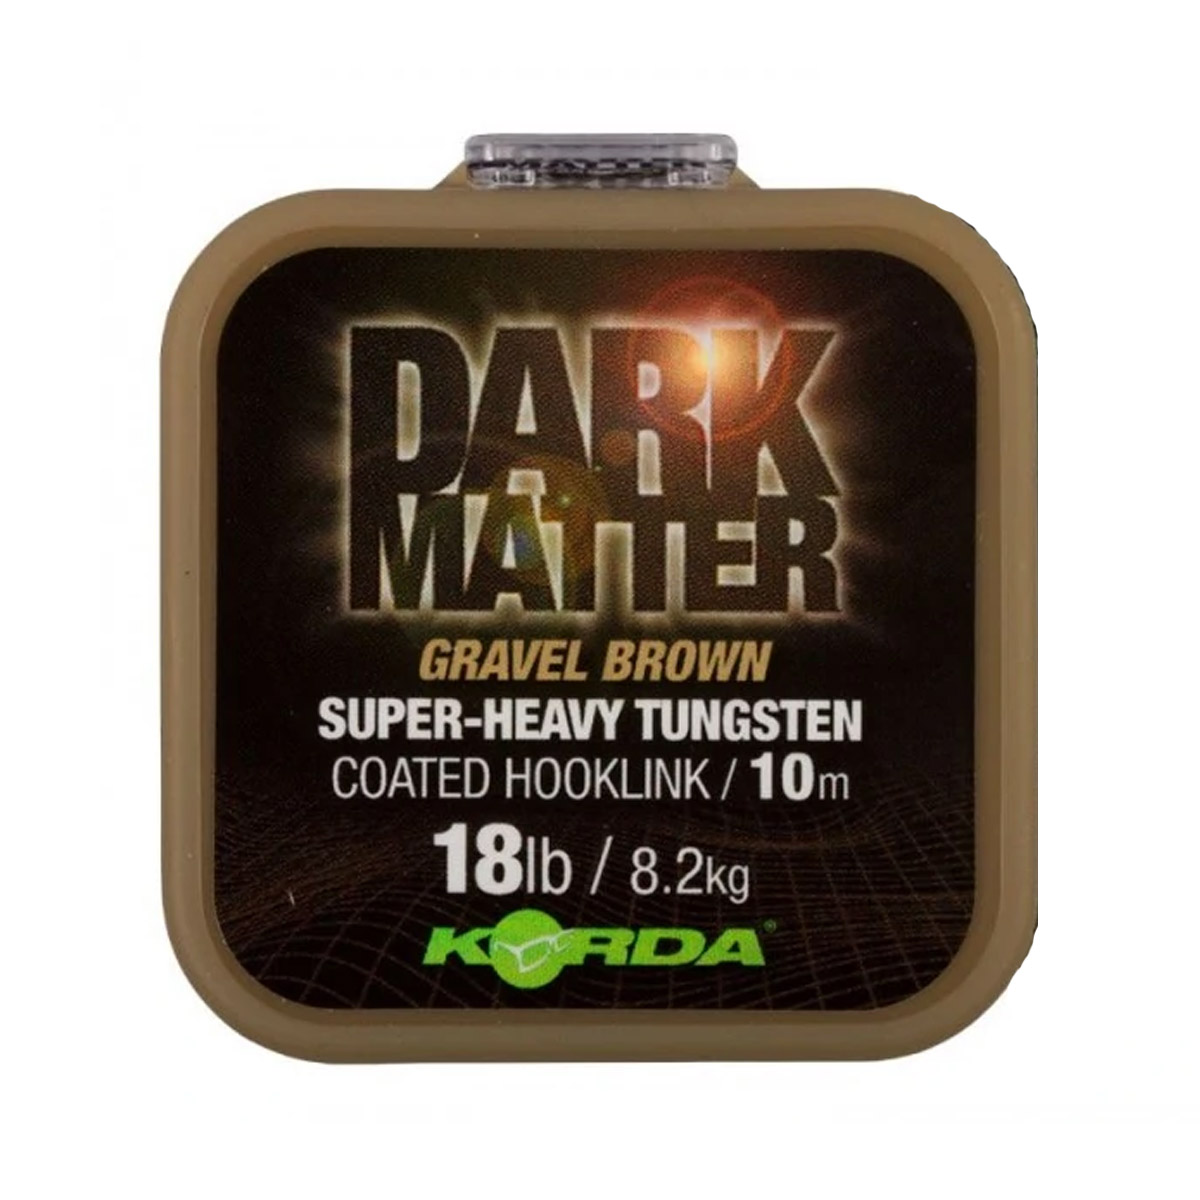 Korda Dark Matter Tungsten Coated Hooklink Gravel Brown